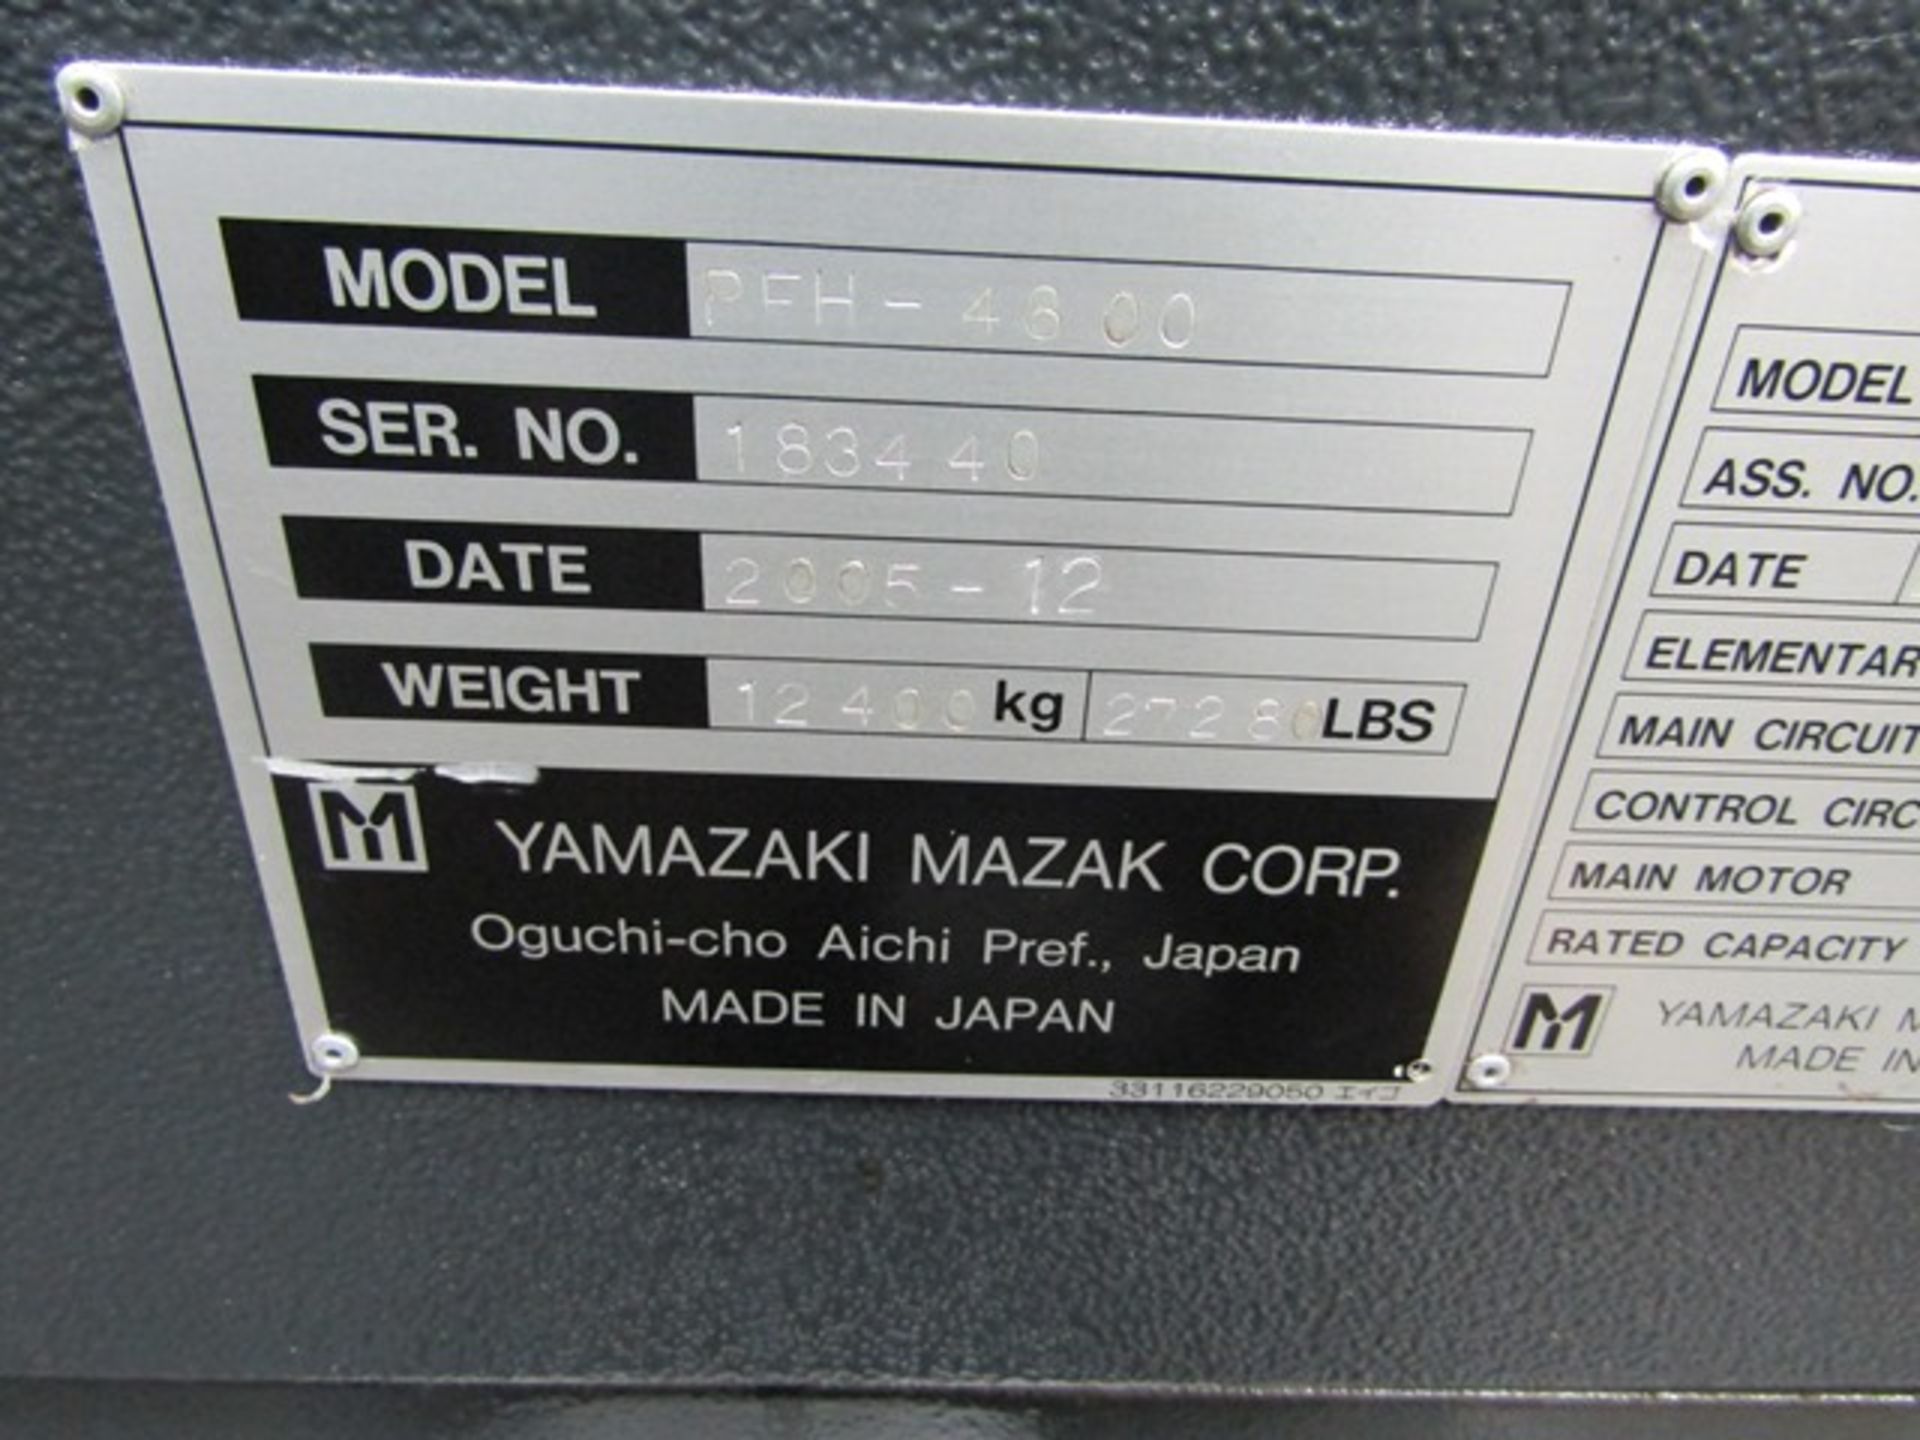 Mazak PFH-4800 CNC twin pallet horizontal machining centre, serial no: 1834 40 (2005), Mazatrol 640M - Image 6 of 16